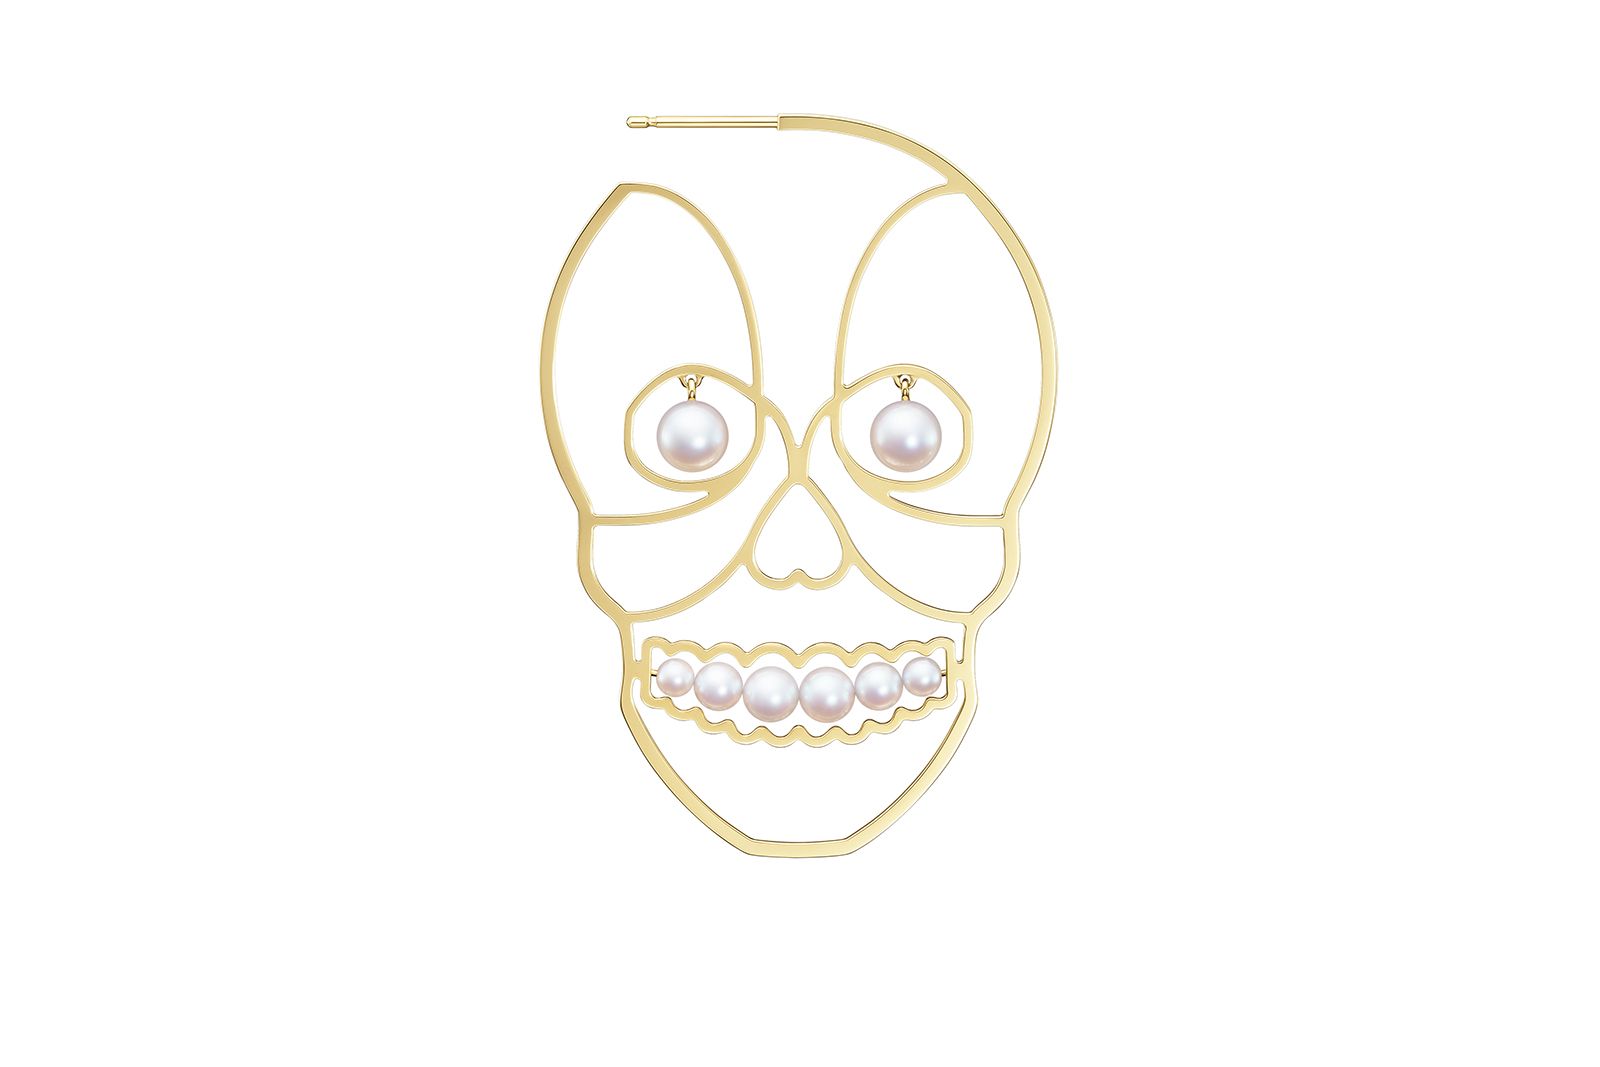 Tasaki x Fiona Krüger Petit Skull earring in yellow gold with white Akoya pearls